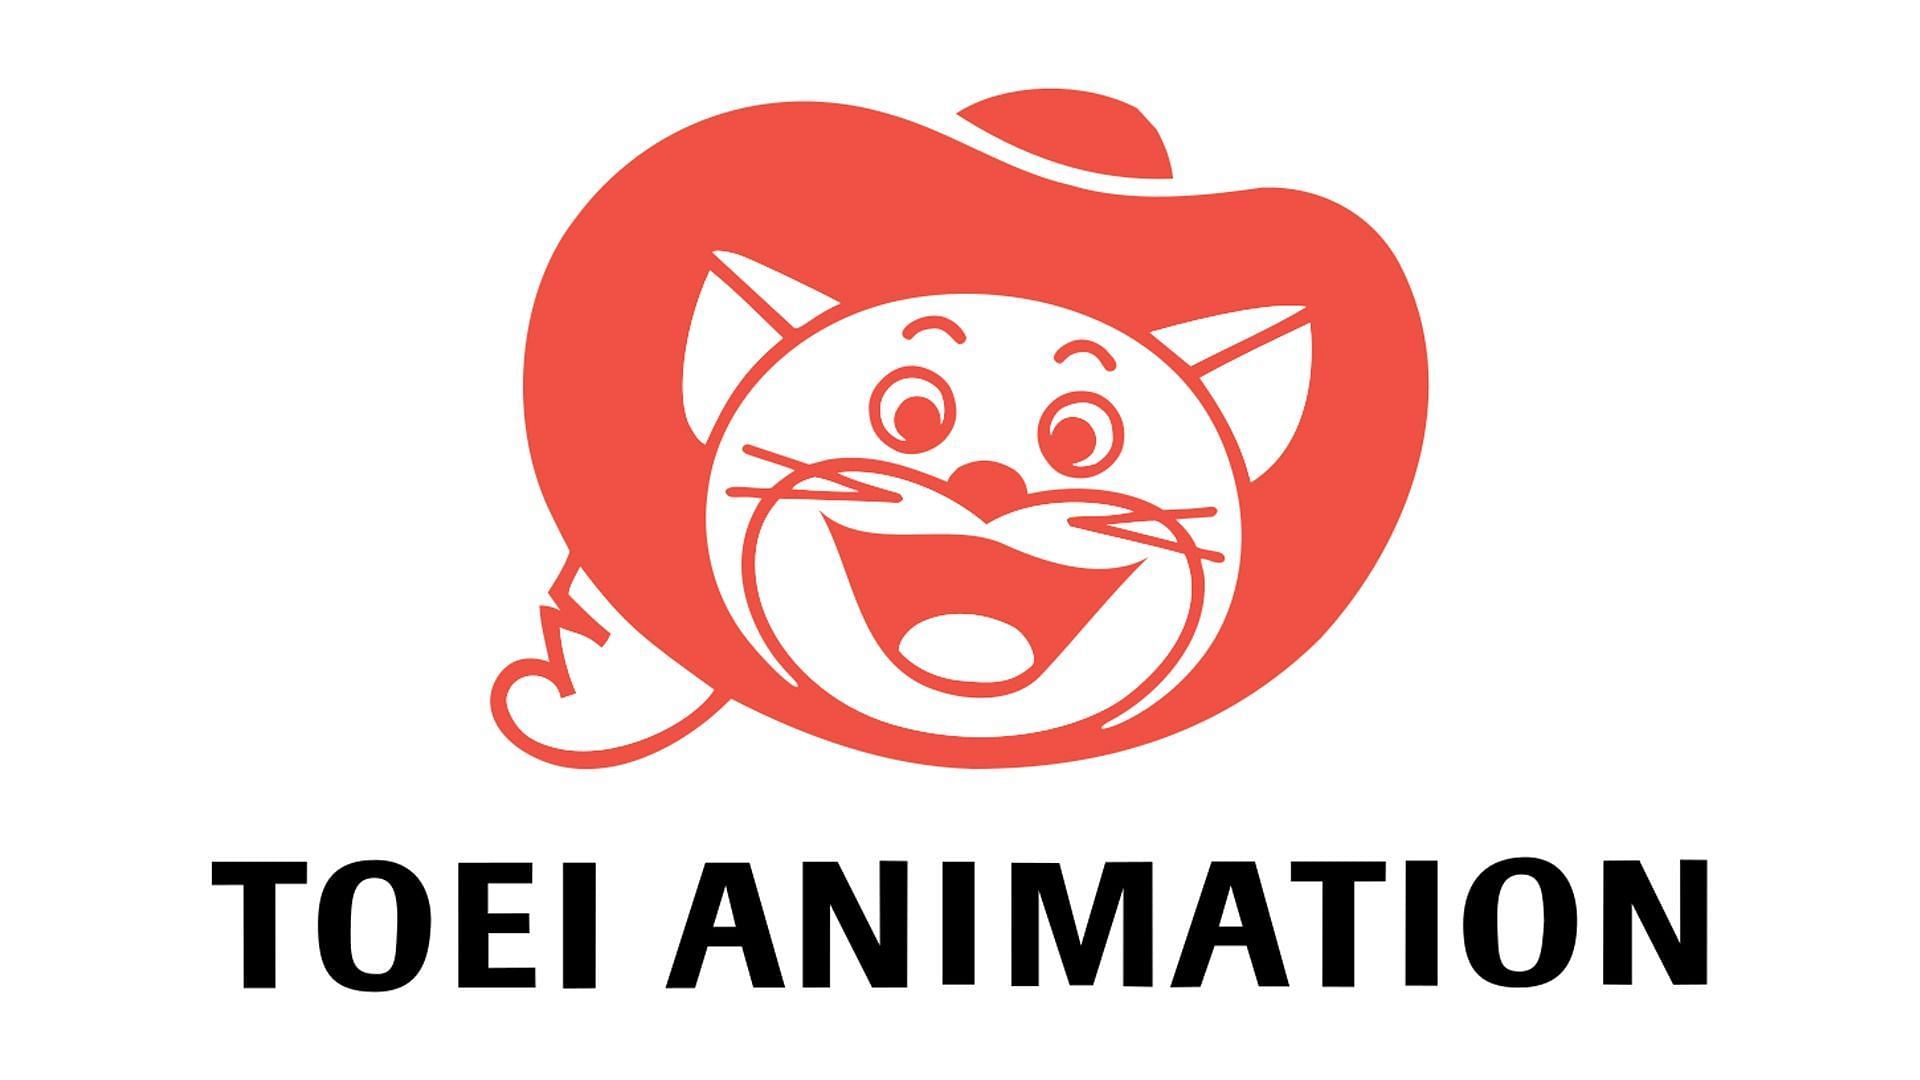 One of many logos for Toei Animation (Image via Toei Animation)